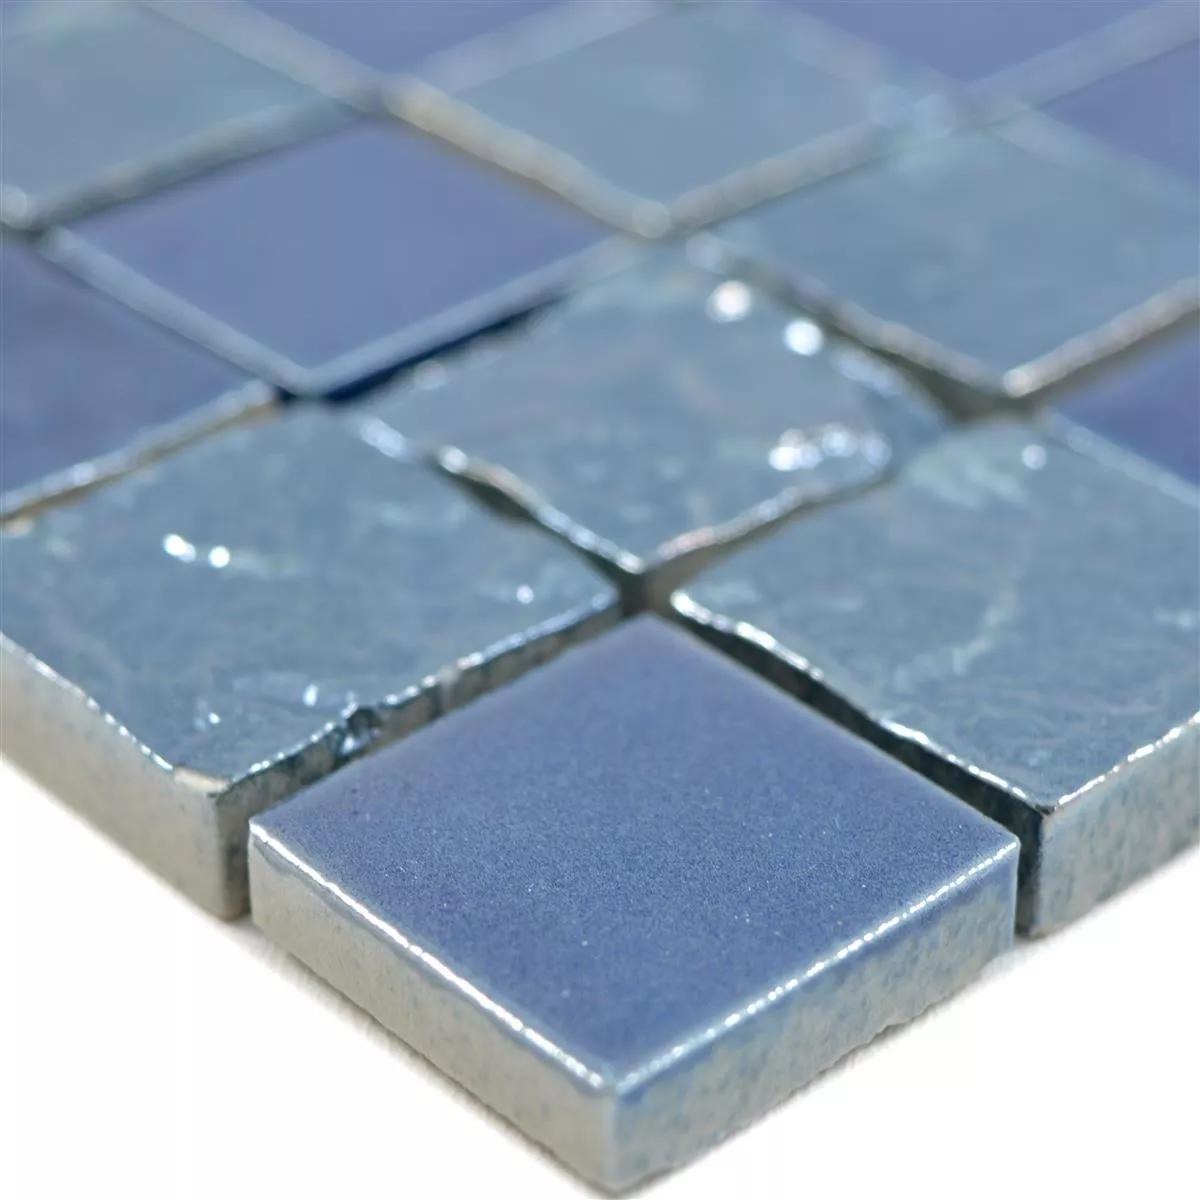 Sample Ceramic Mosaic Tiles Shogun 3D Blue